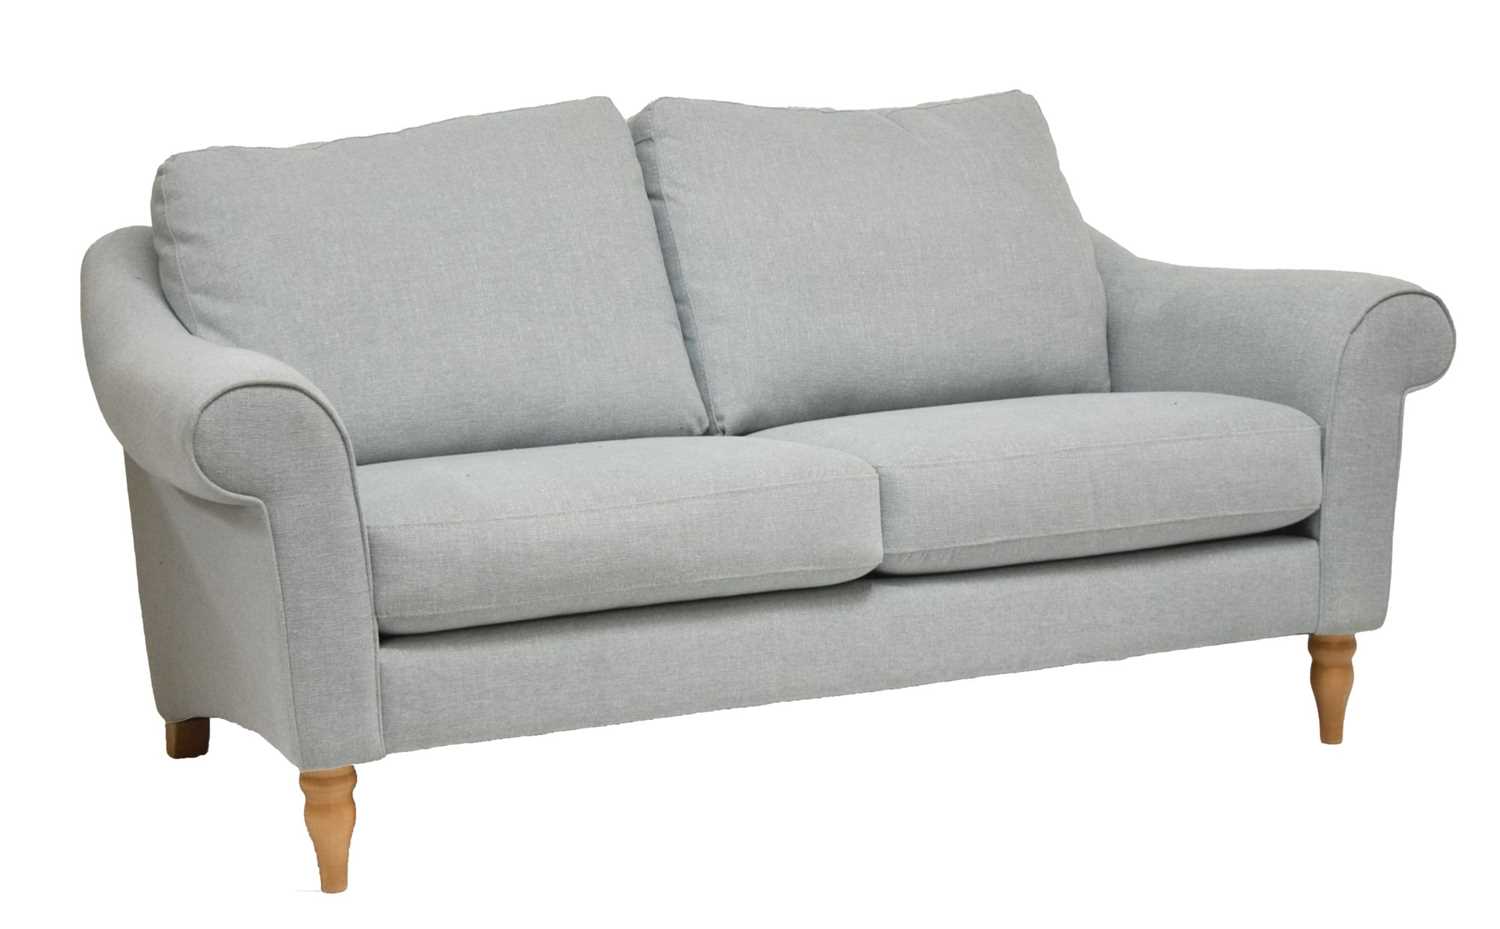 John Lewis 'Camber' medium two-seater sofa or settee